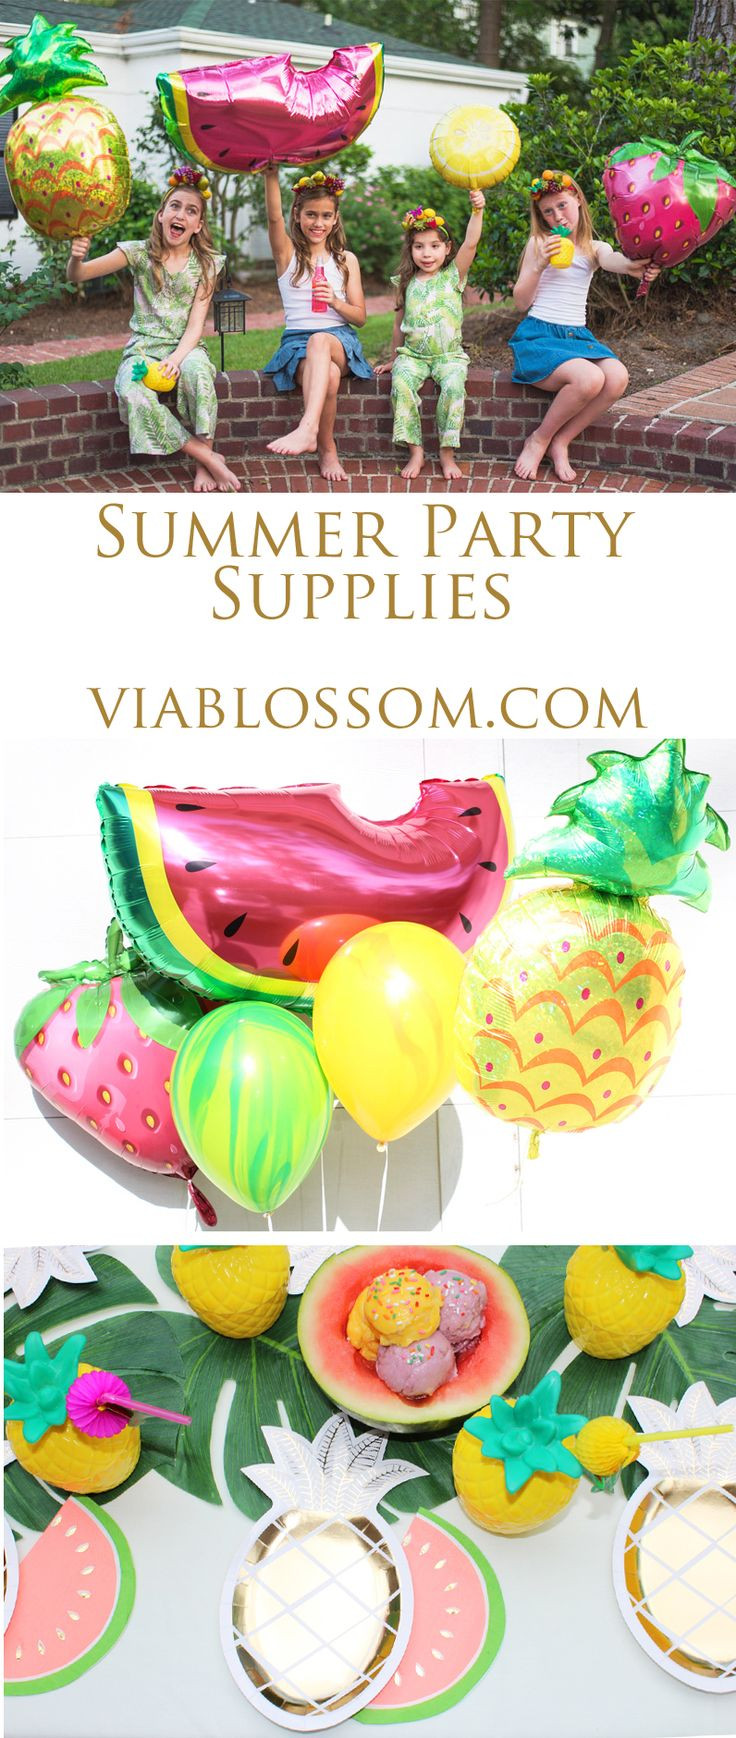 Summer Party Theme Ideas
 Best 20 Summer party themes ideas on Pinterest